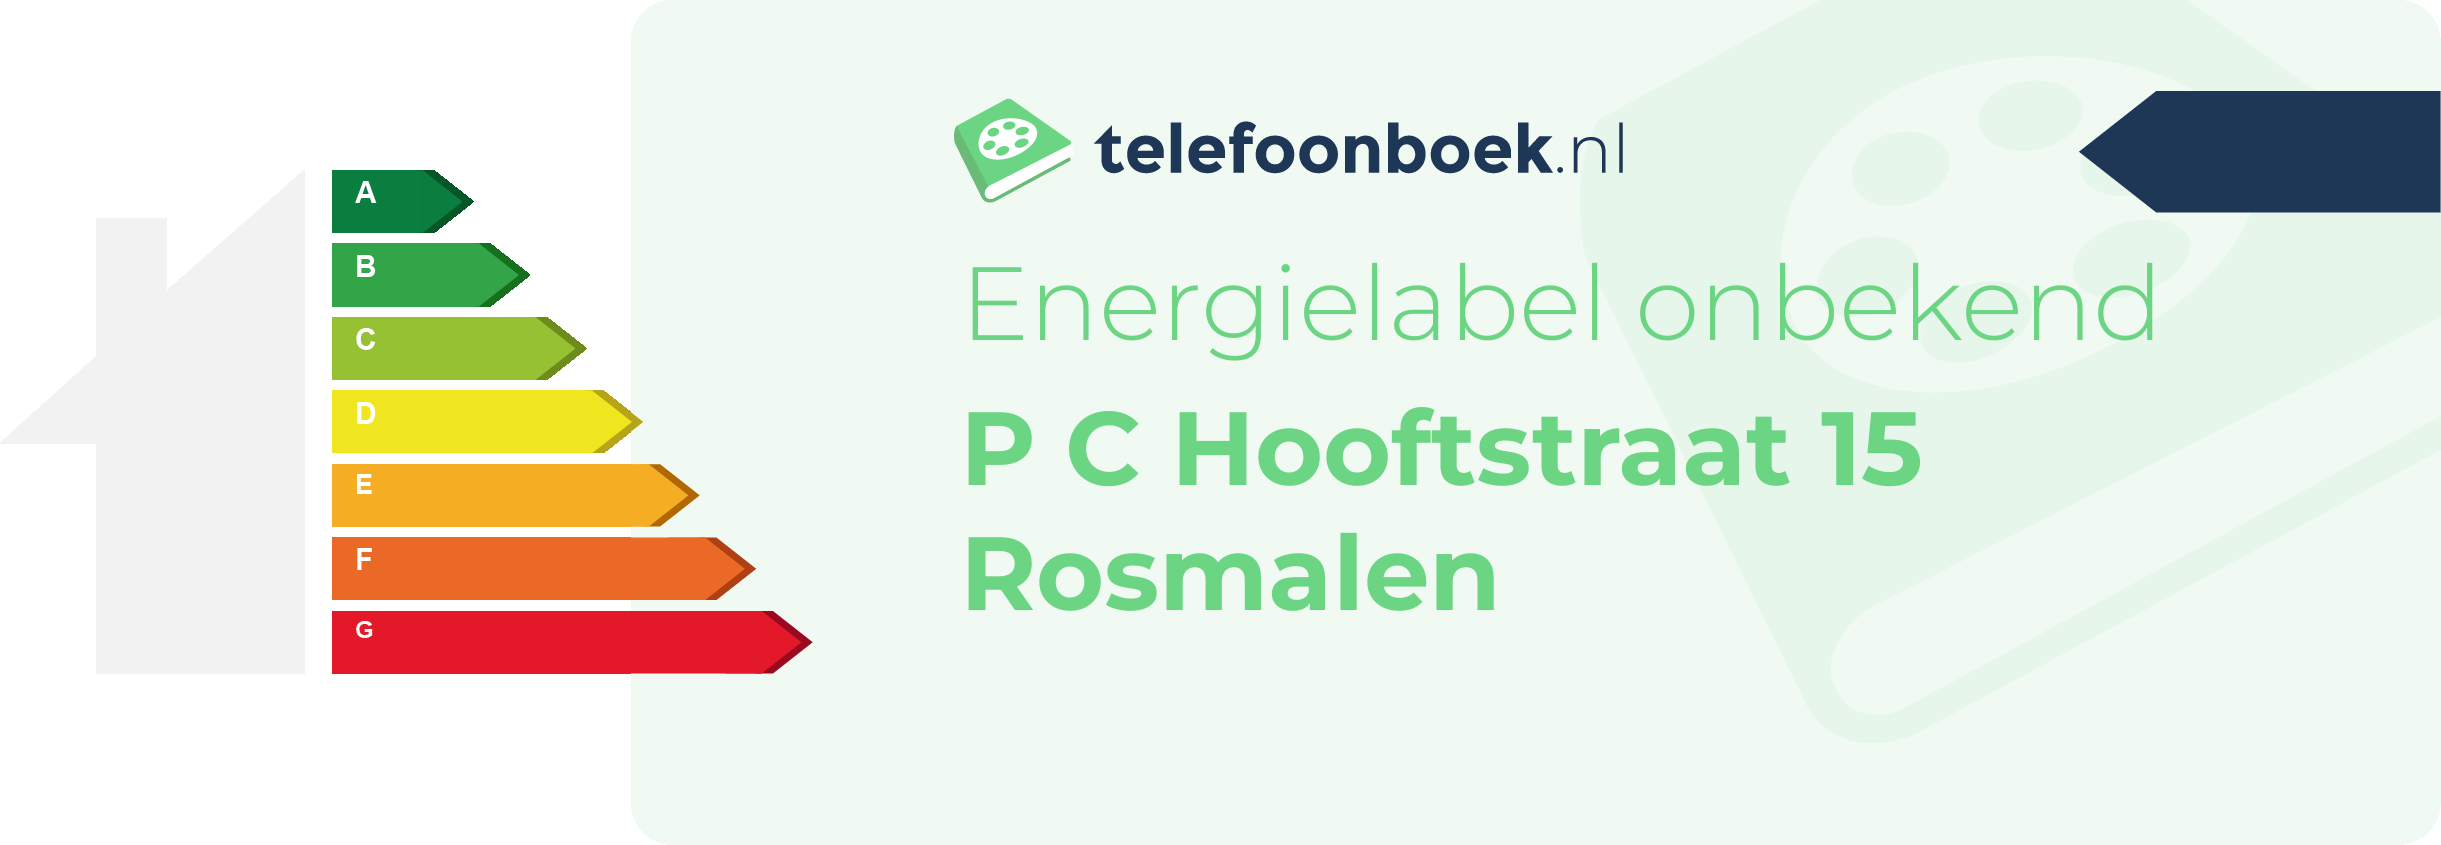 Energielabel P C Hooftstraat 15 Rosmalen